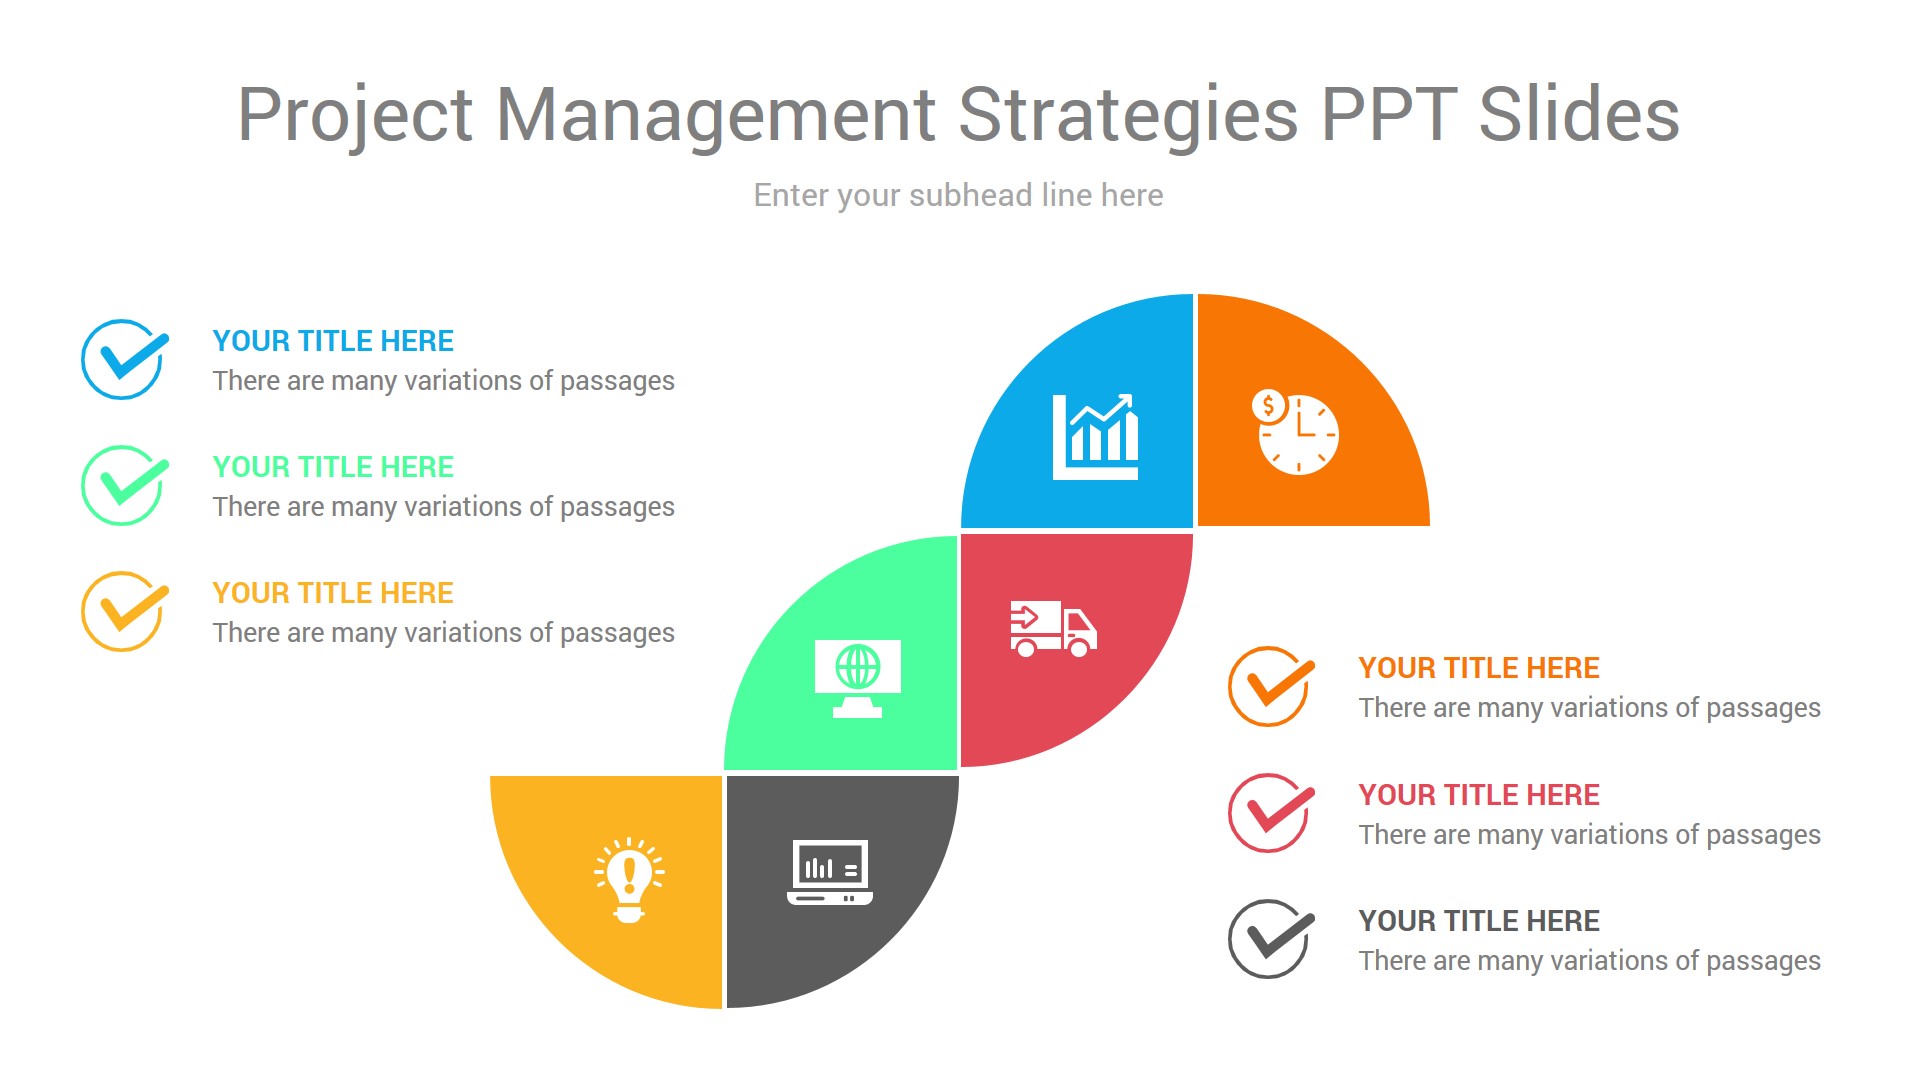 Project Management Strategies PPT Slides